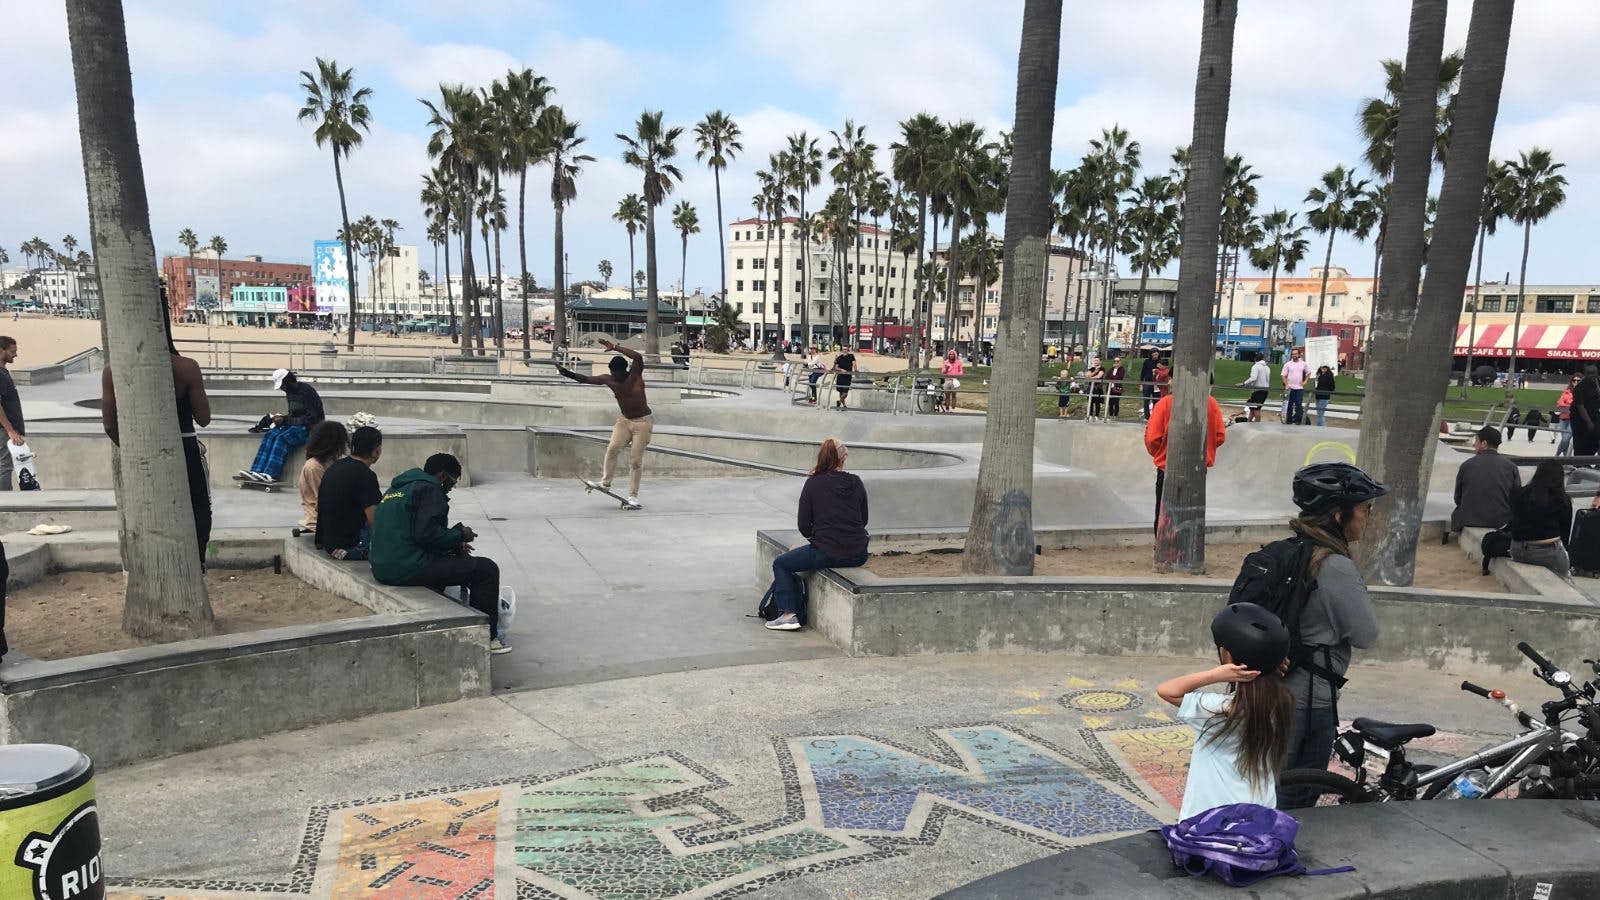 Los Angeles - Venice Boardwalk (GAME IN TEST MODE) image